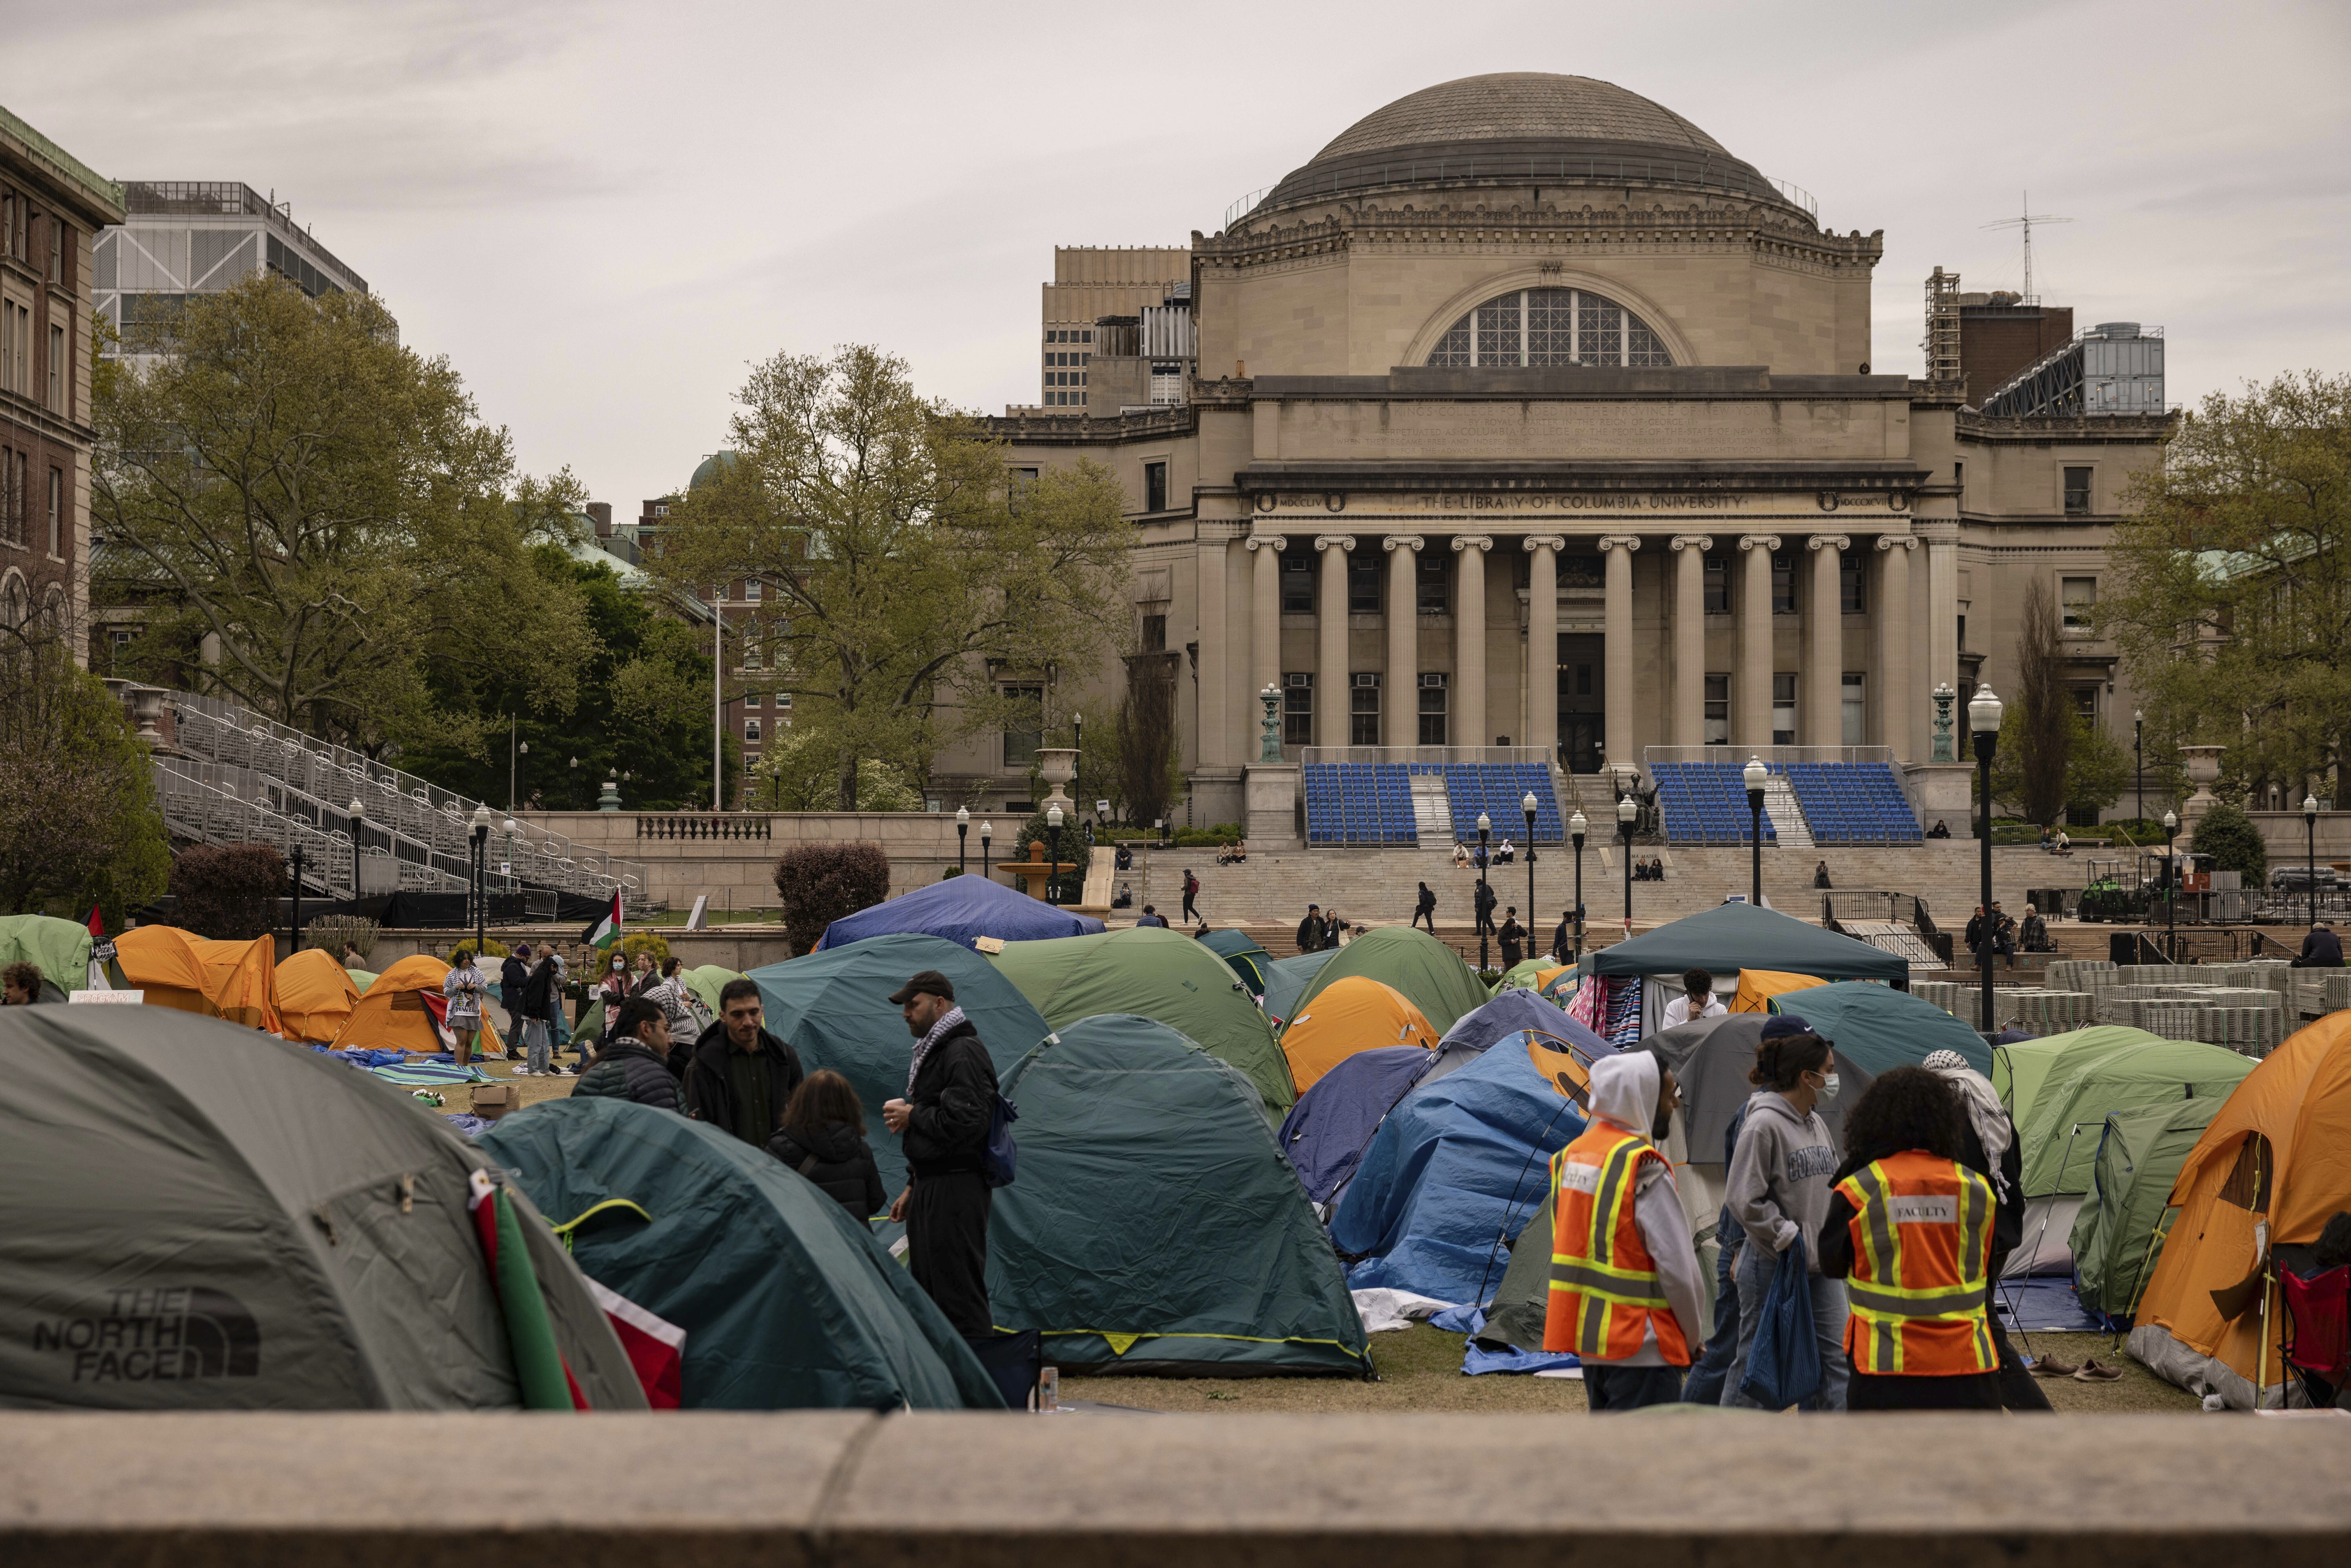 U.S. schools shut down student anti-war encampments after antisemitic
activity reports